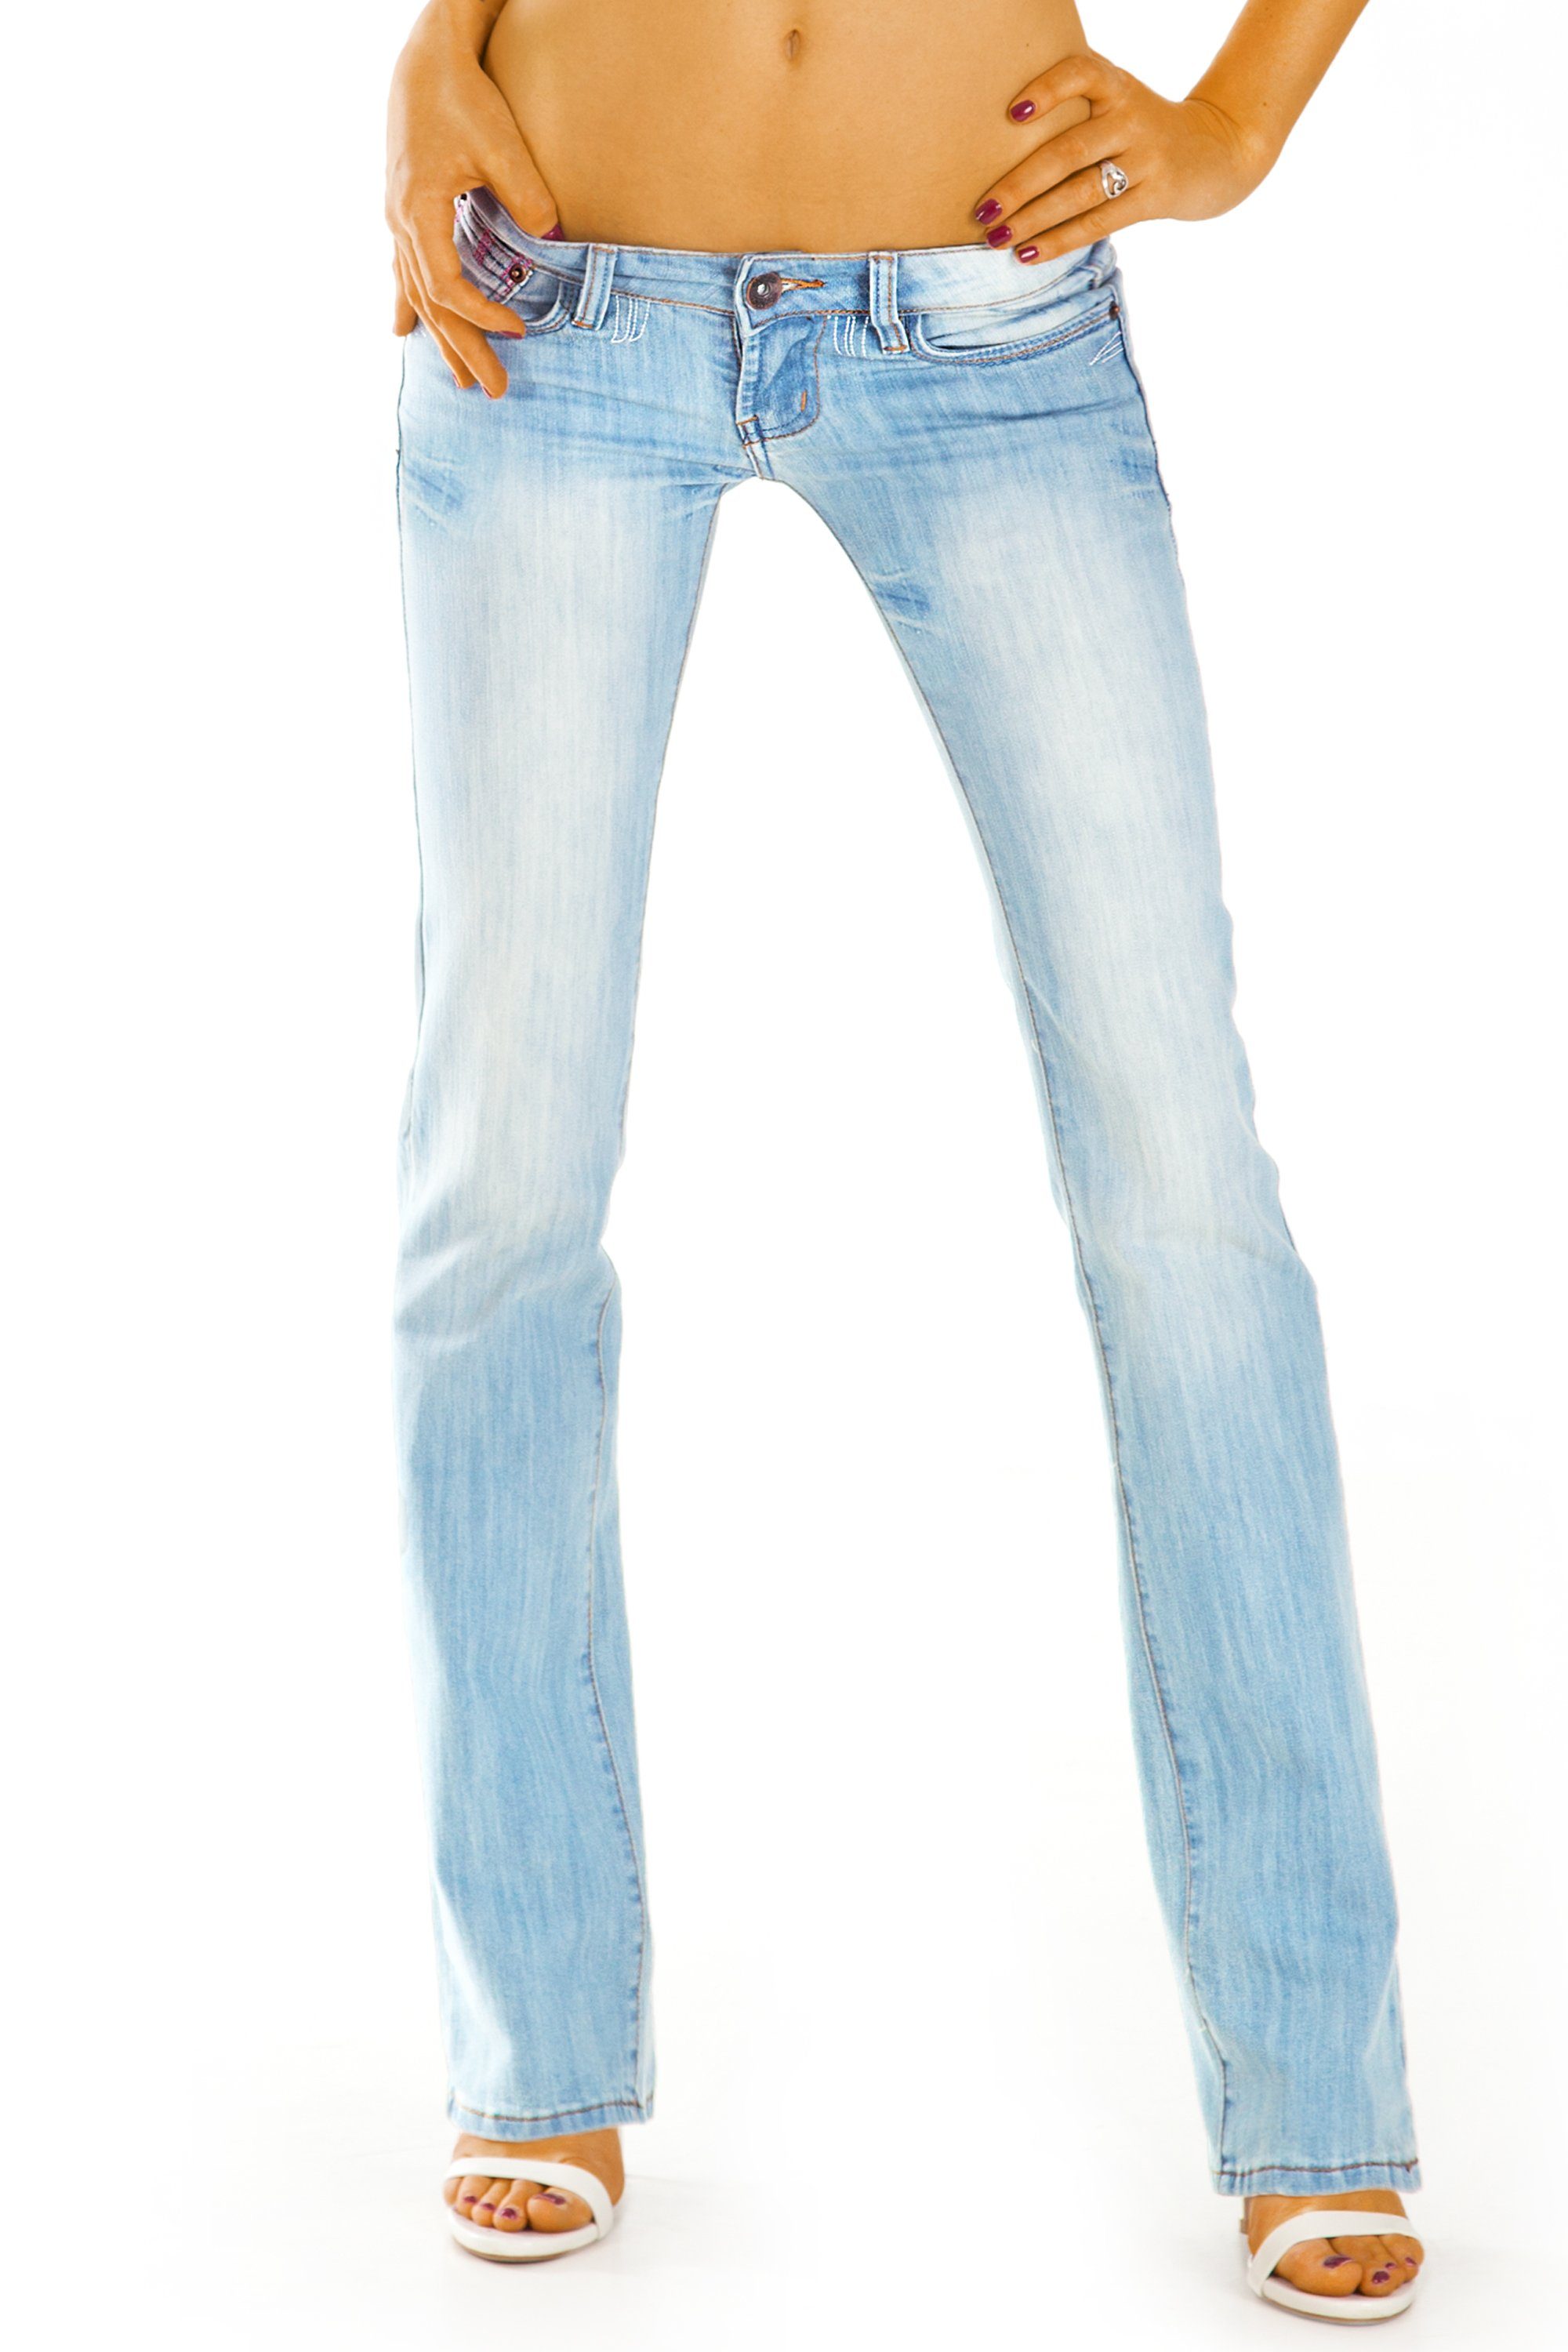 Hüftjeans - styled Damen Jeanshose j37a-1 sehr tiefer Bootcut-Jeans Bootcut niedrige extrem be Stretch-Anteil, Leibhöhe, 5-pOcket-Style mit - Leibhöhe